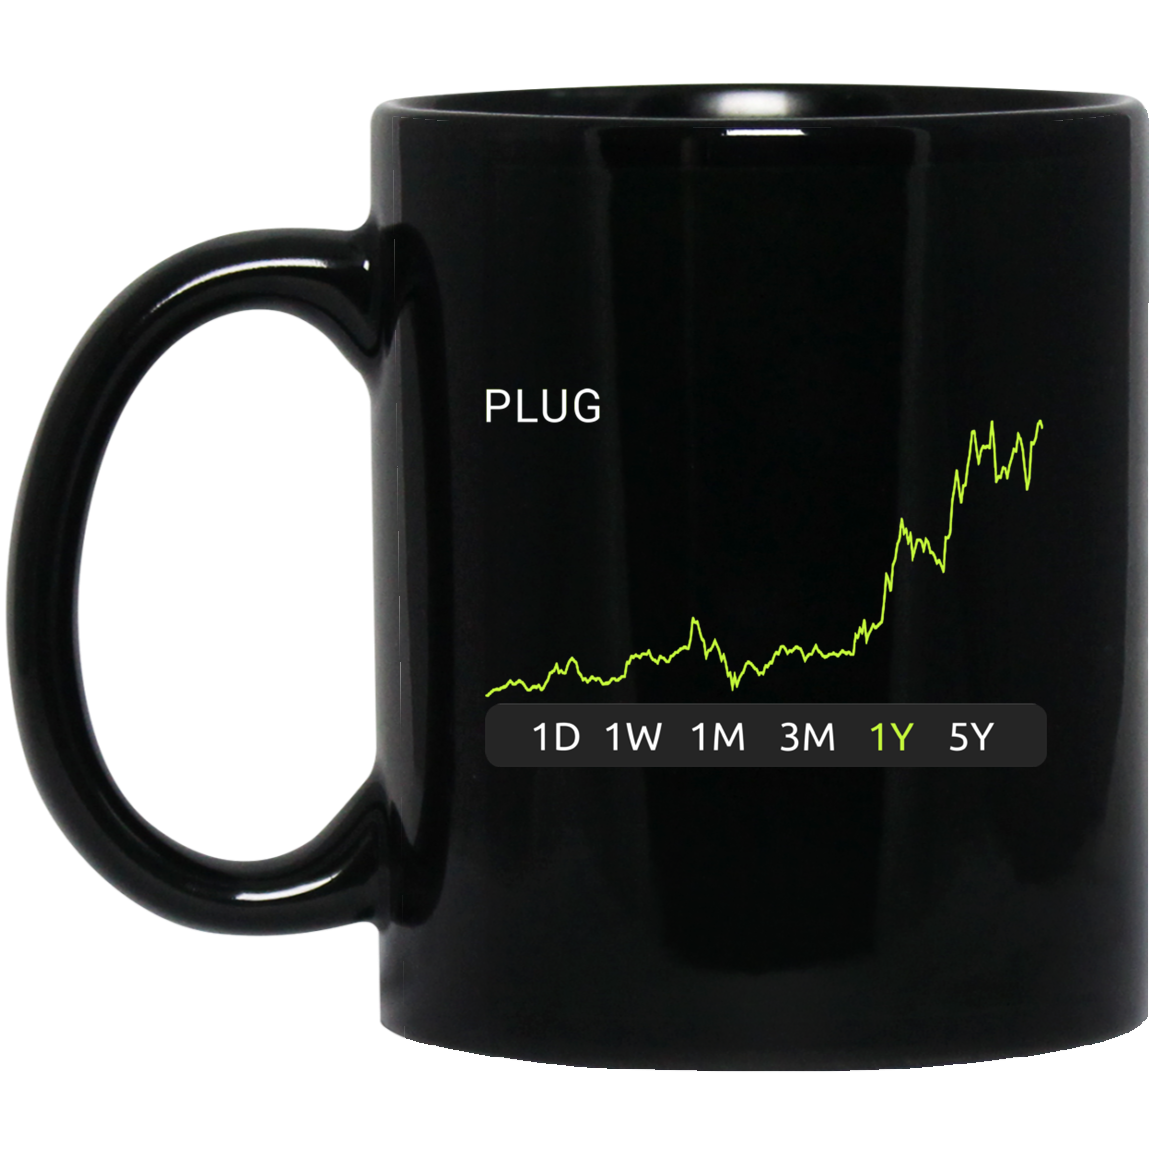 PLUG Stock 1y Mug